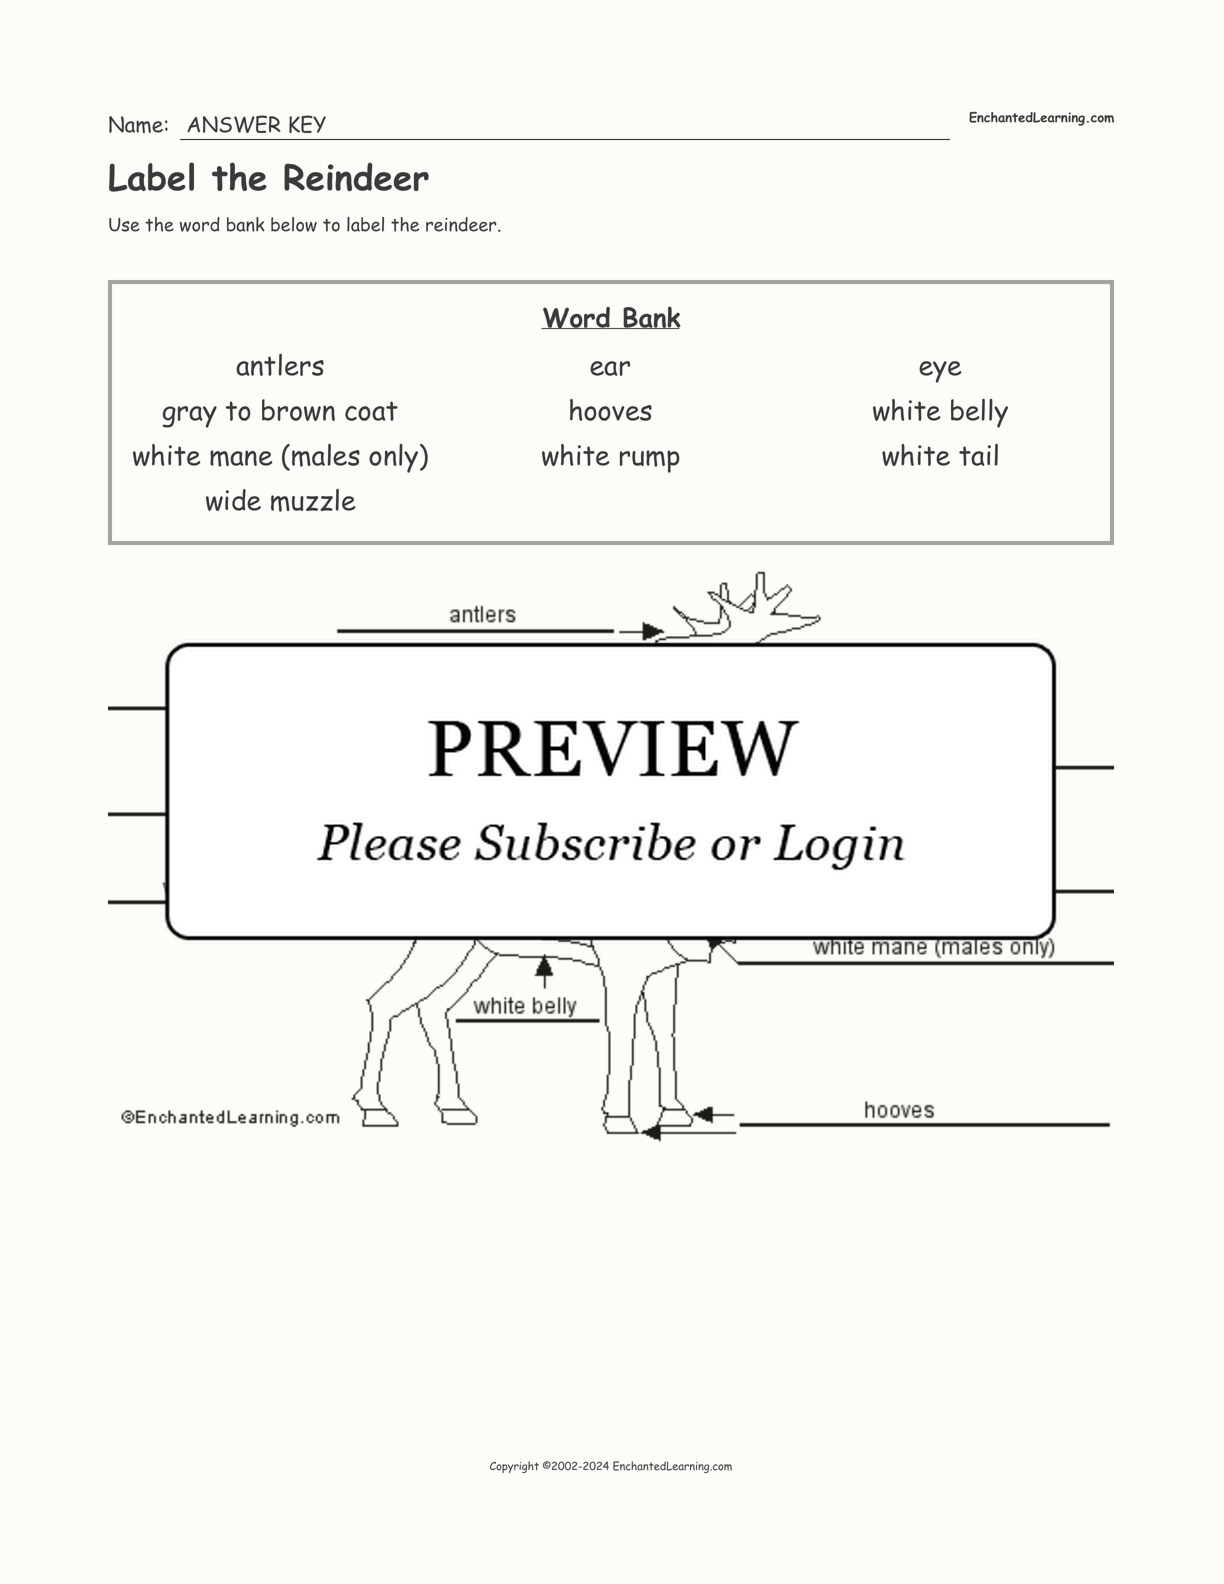 Label the Reindeer interactive worksheet page 2